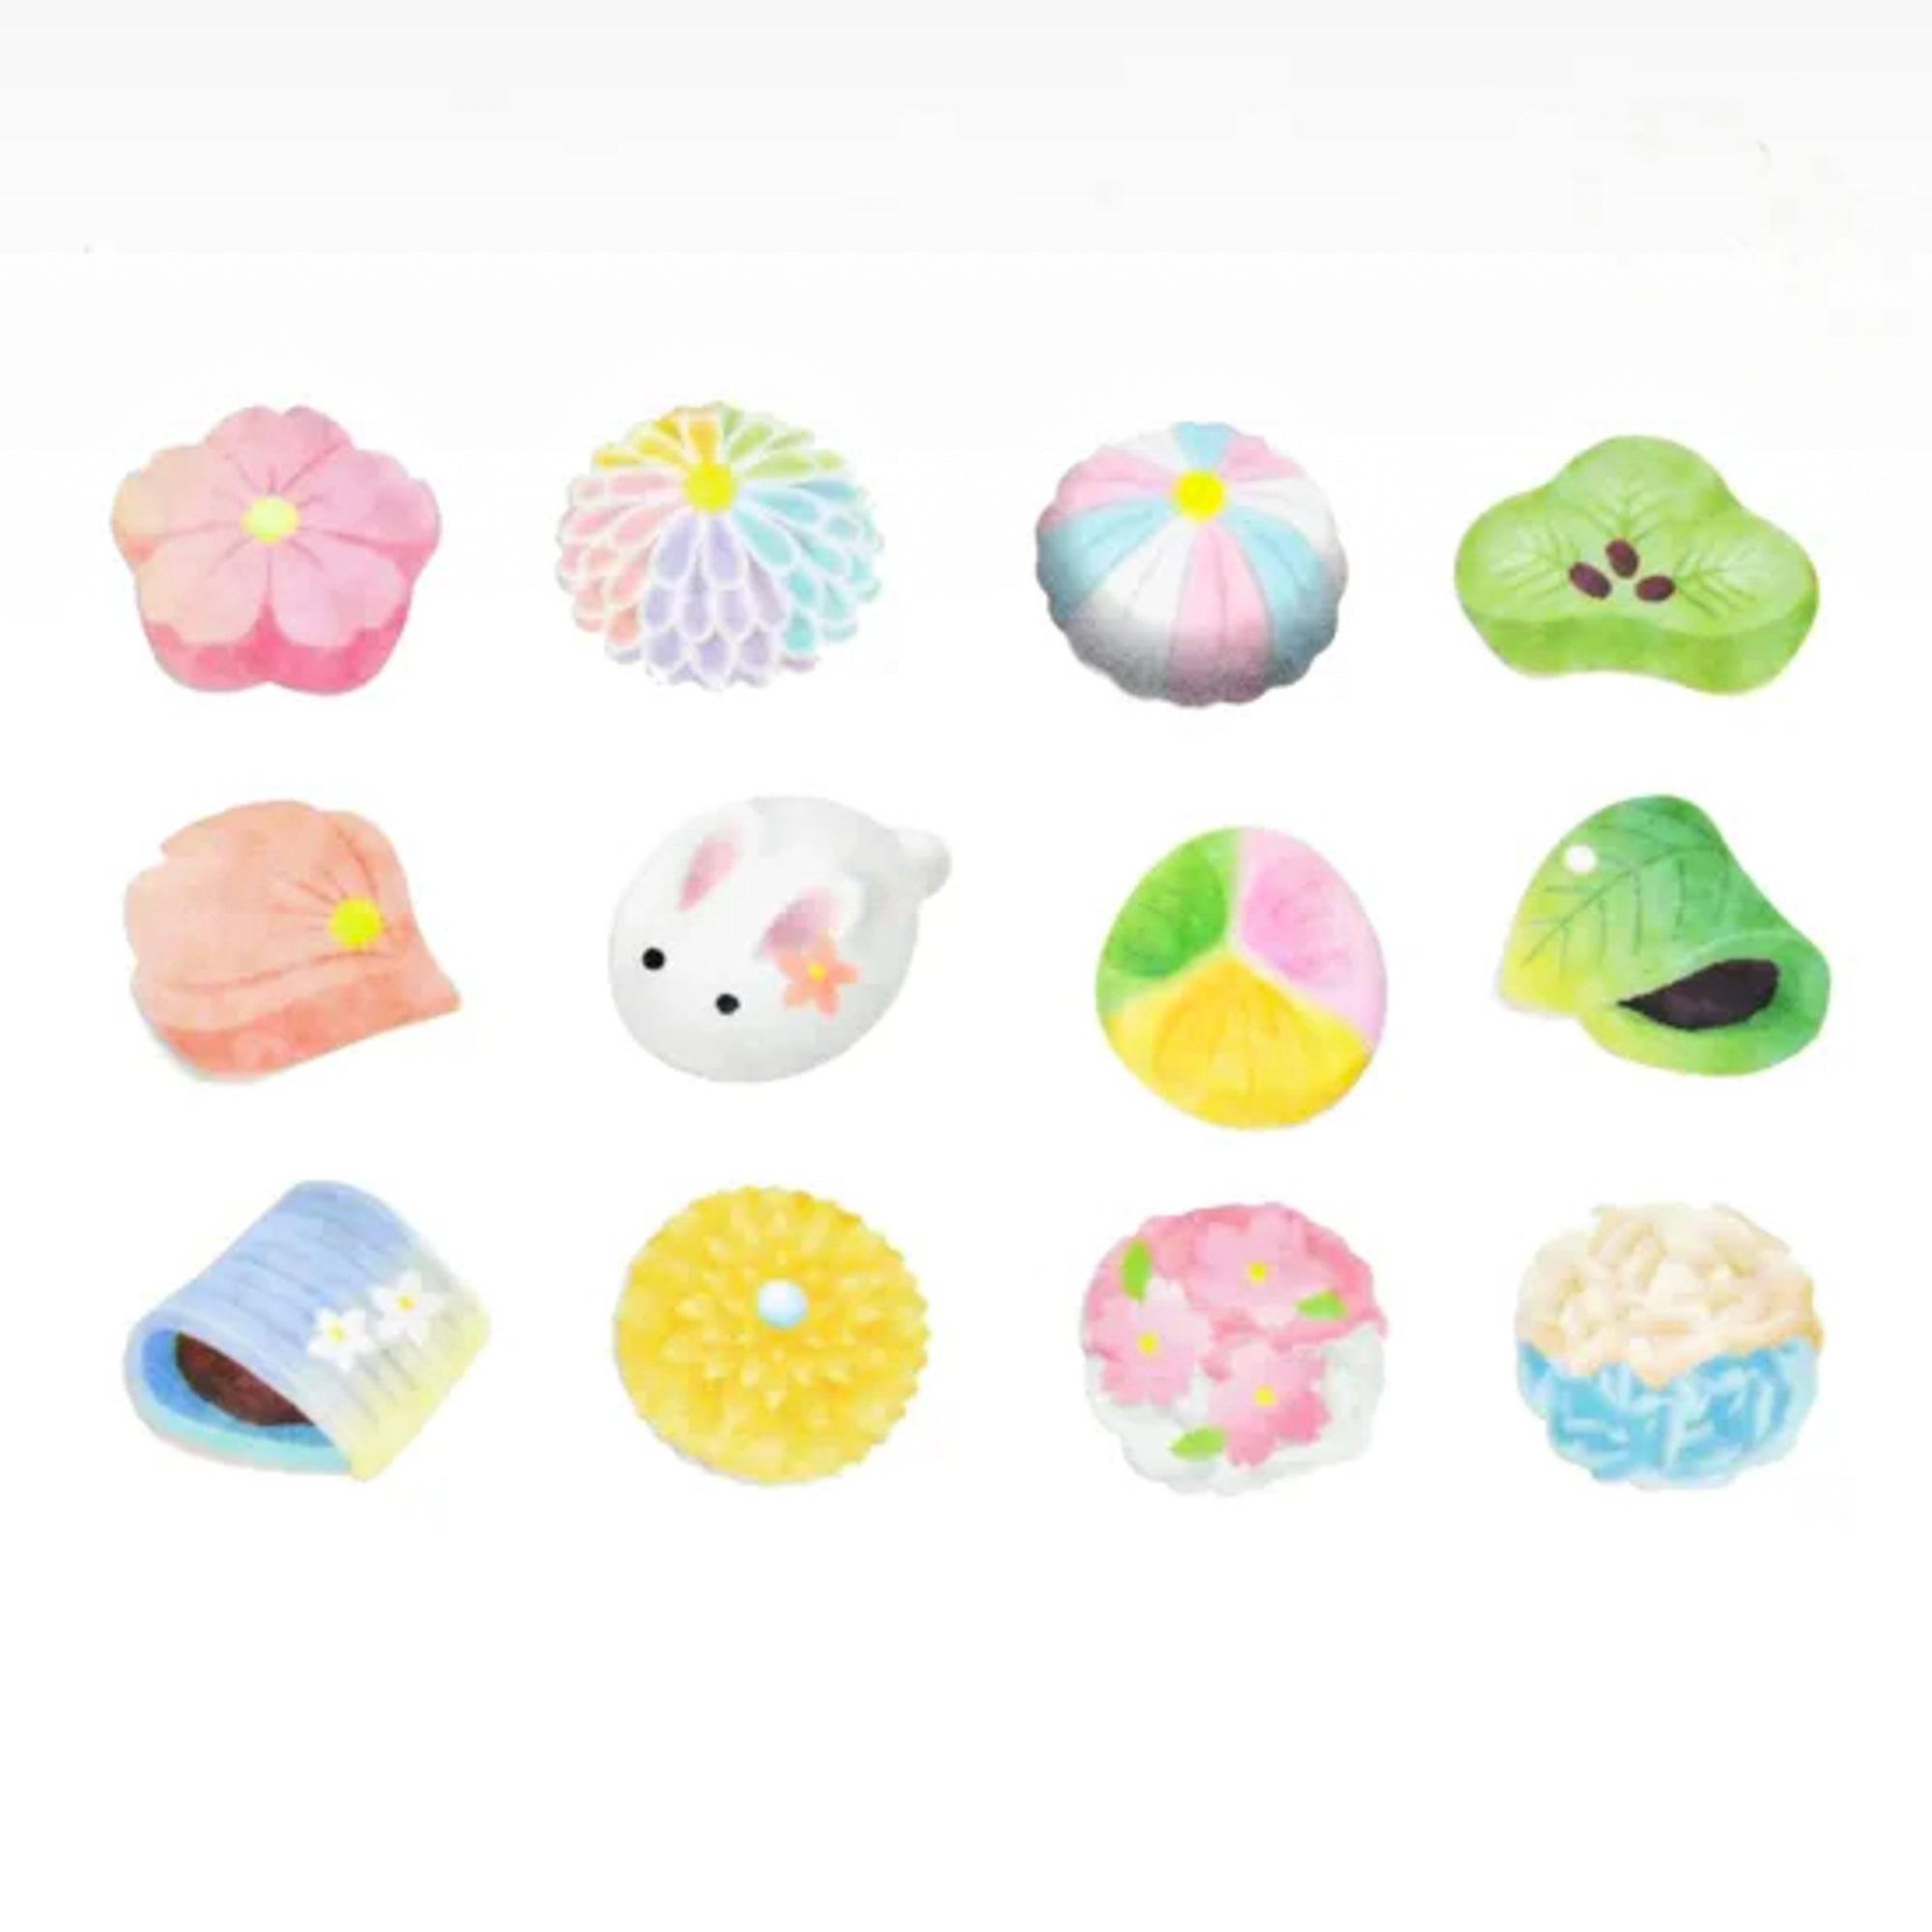 Wagashi Japanese Sweet Washi Tape Sticker Roll - Bande - Komorebi Stationery